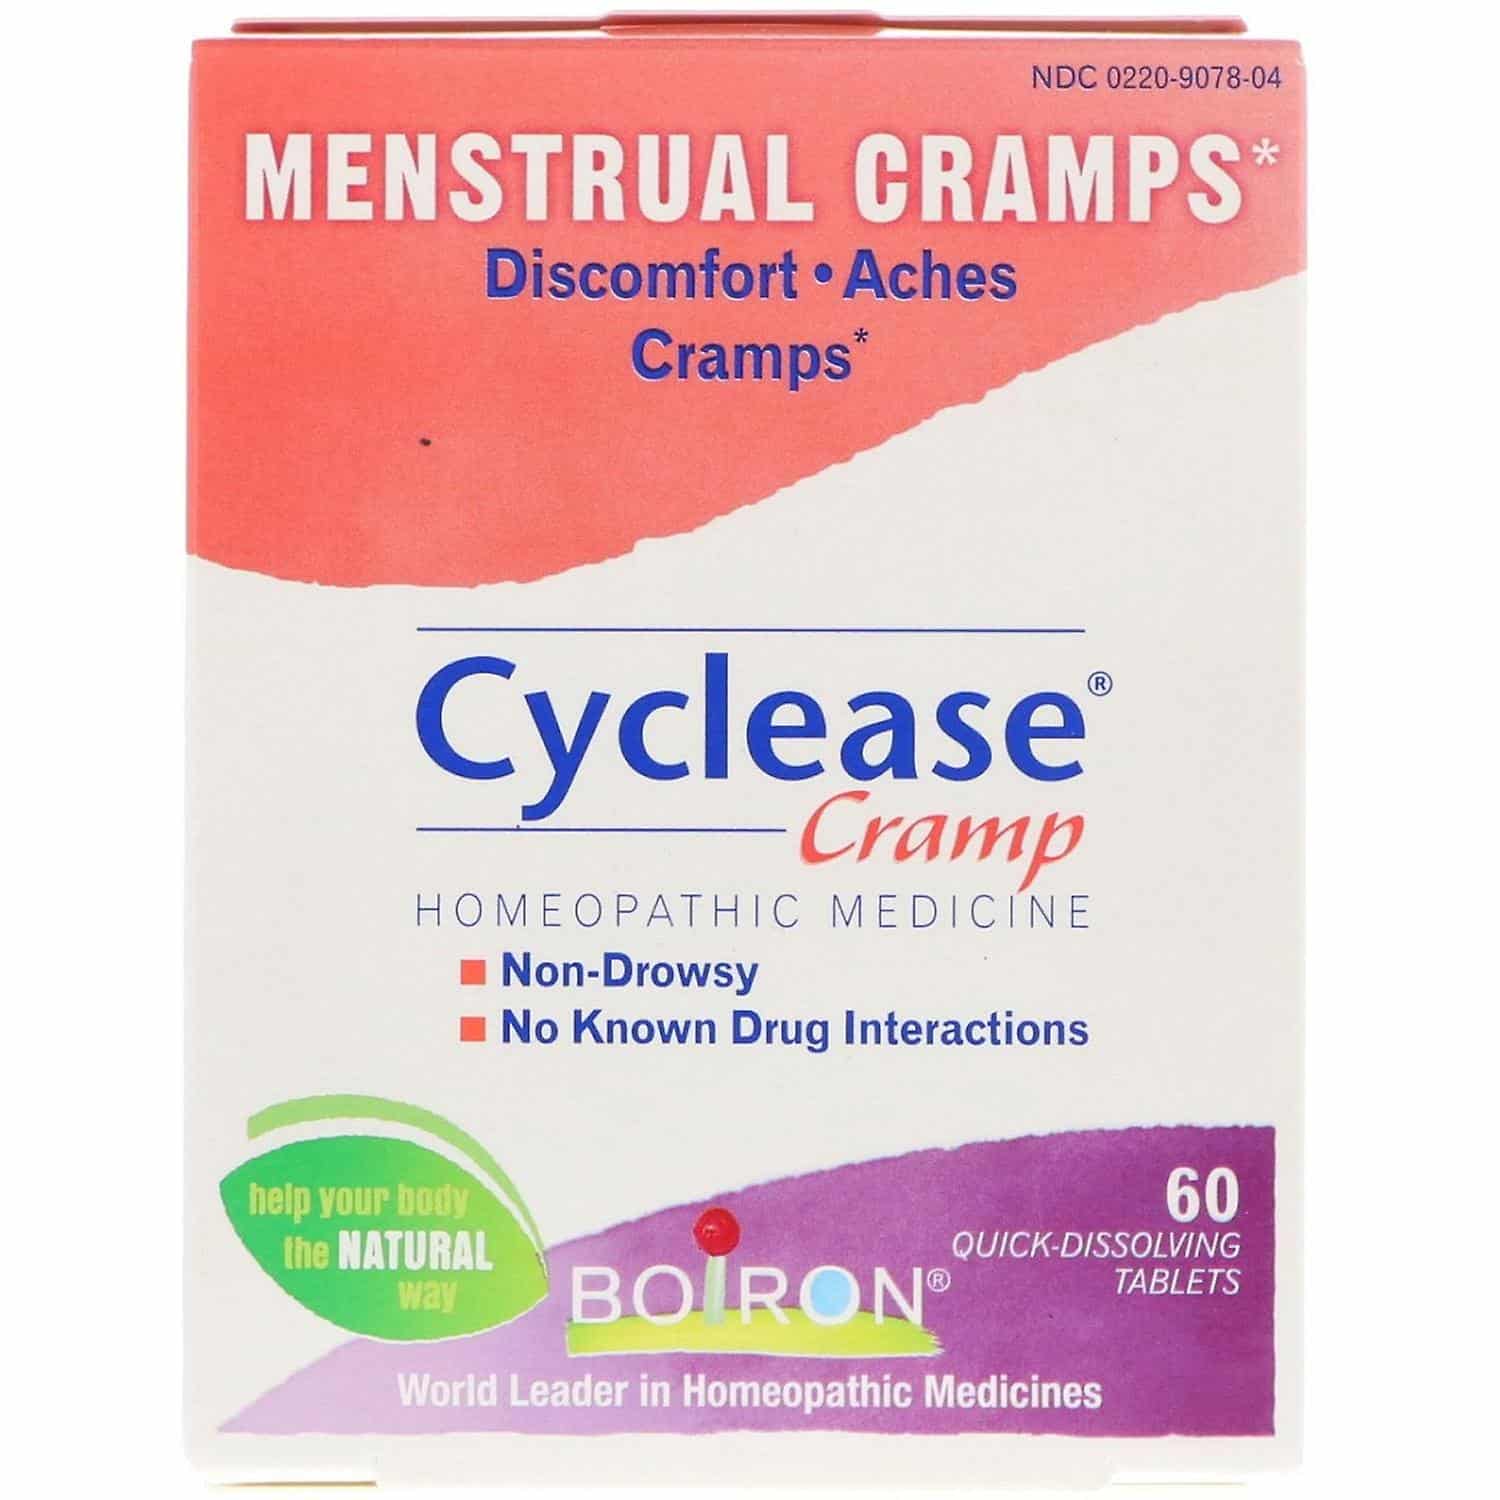 Boiron, Cyclease Cramp, Menstrual Cramps, 60 Quick